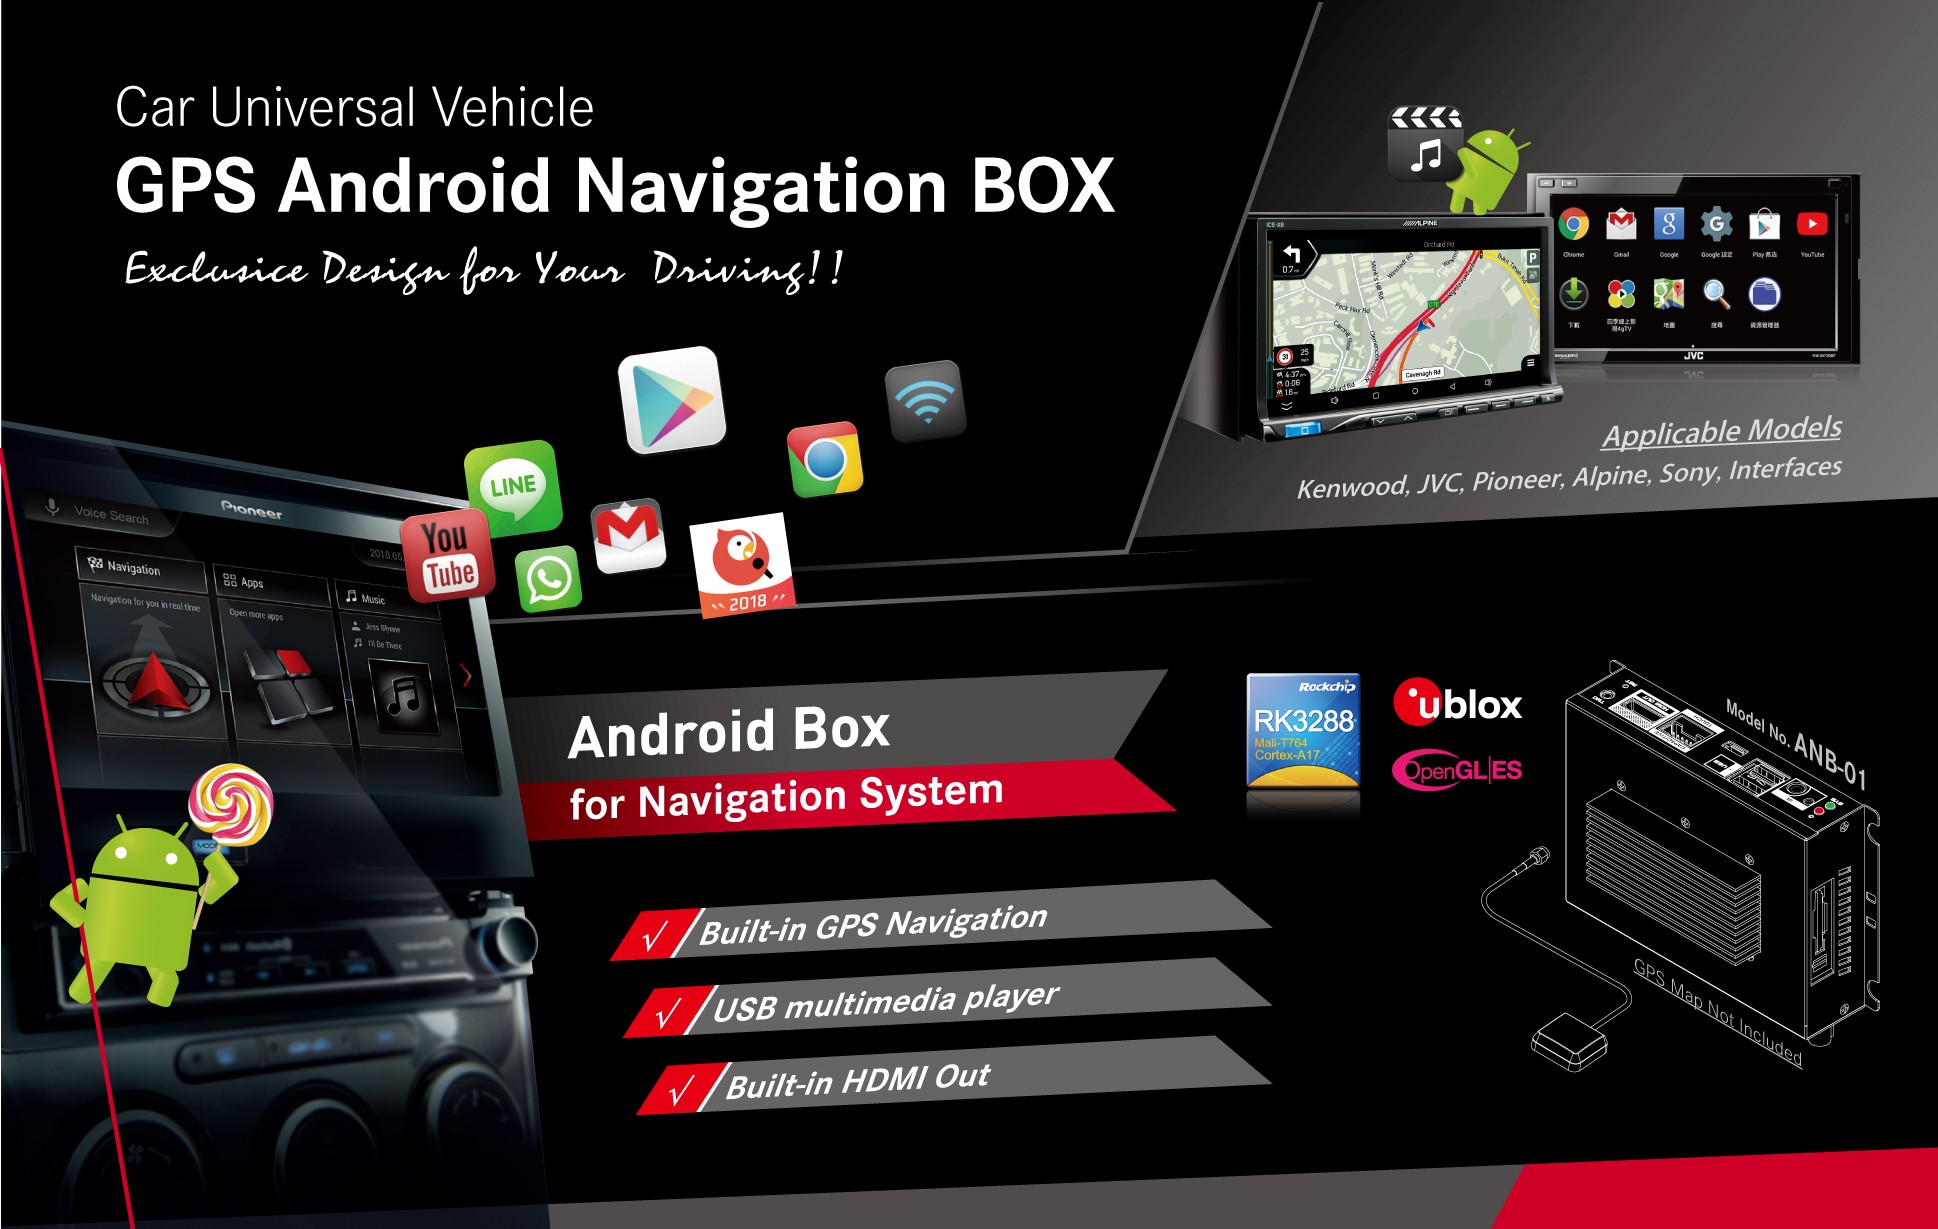 GPS Andriod Navigation Box